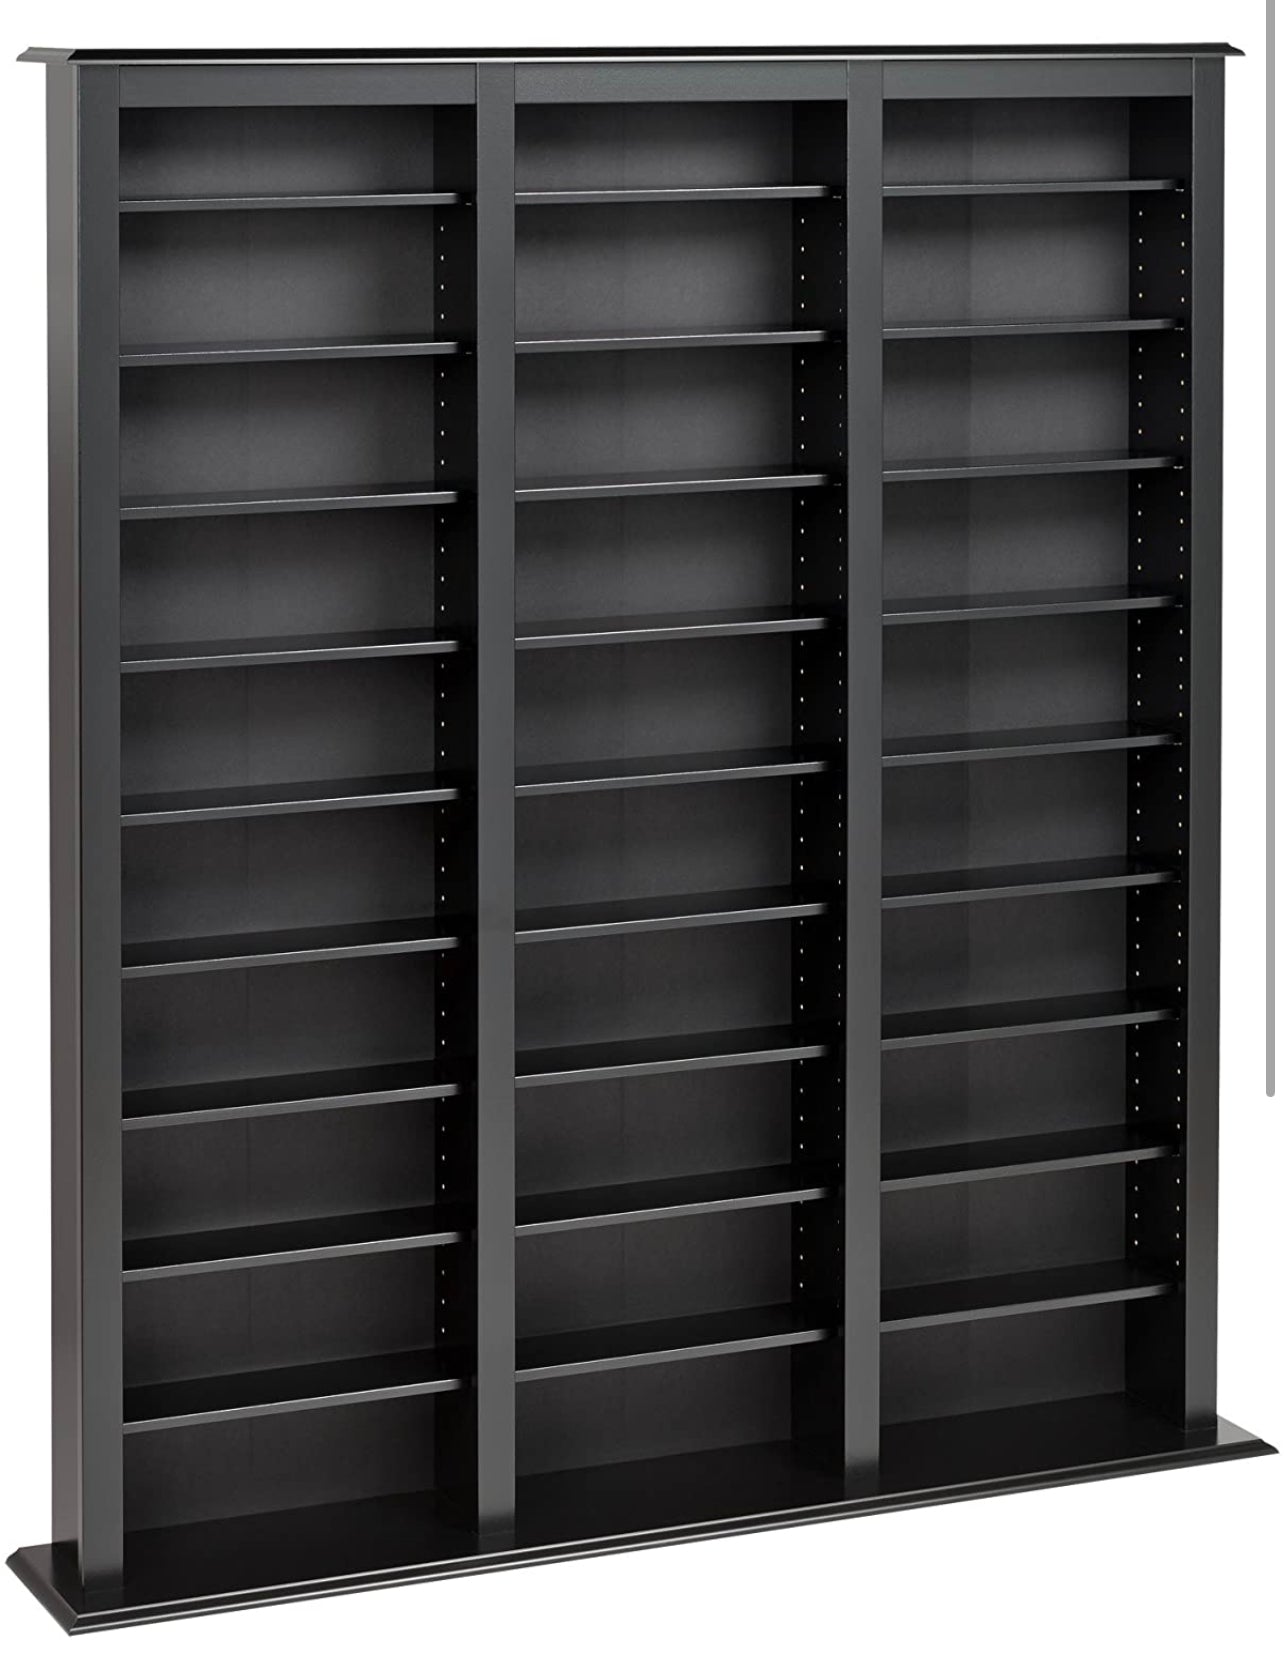 Prepac Triple Width Barrister Tower Storage Cabinet, Black Discount Bros, LLC.